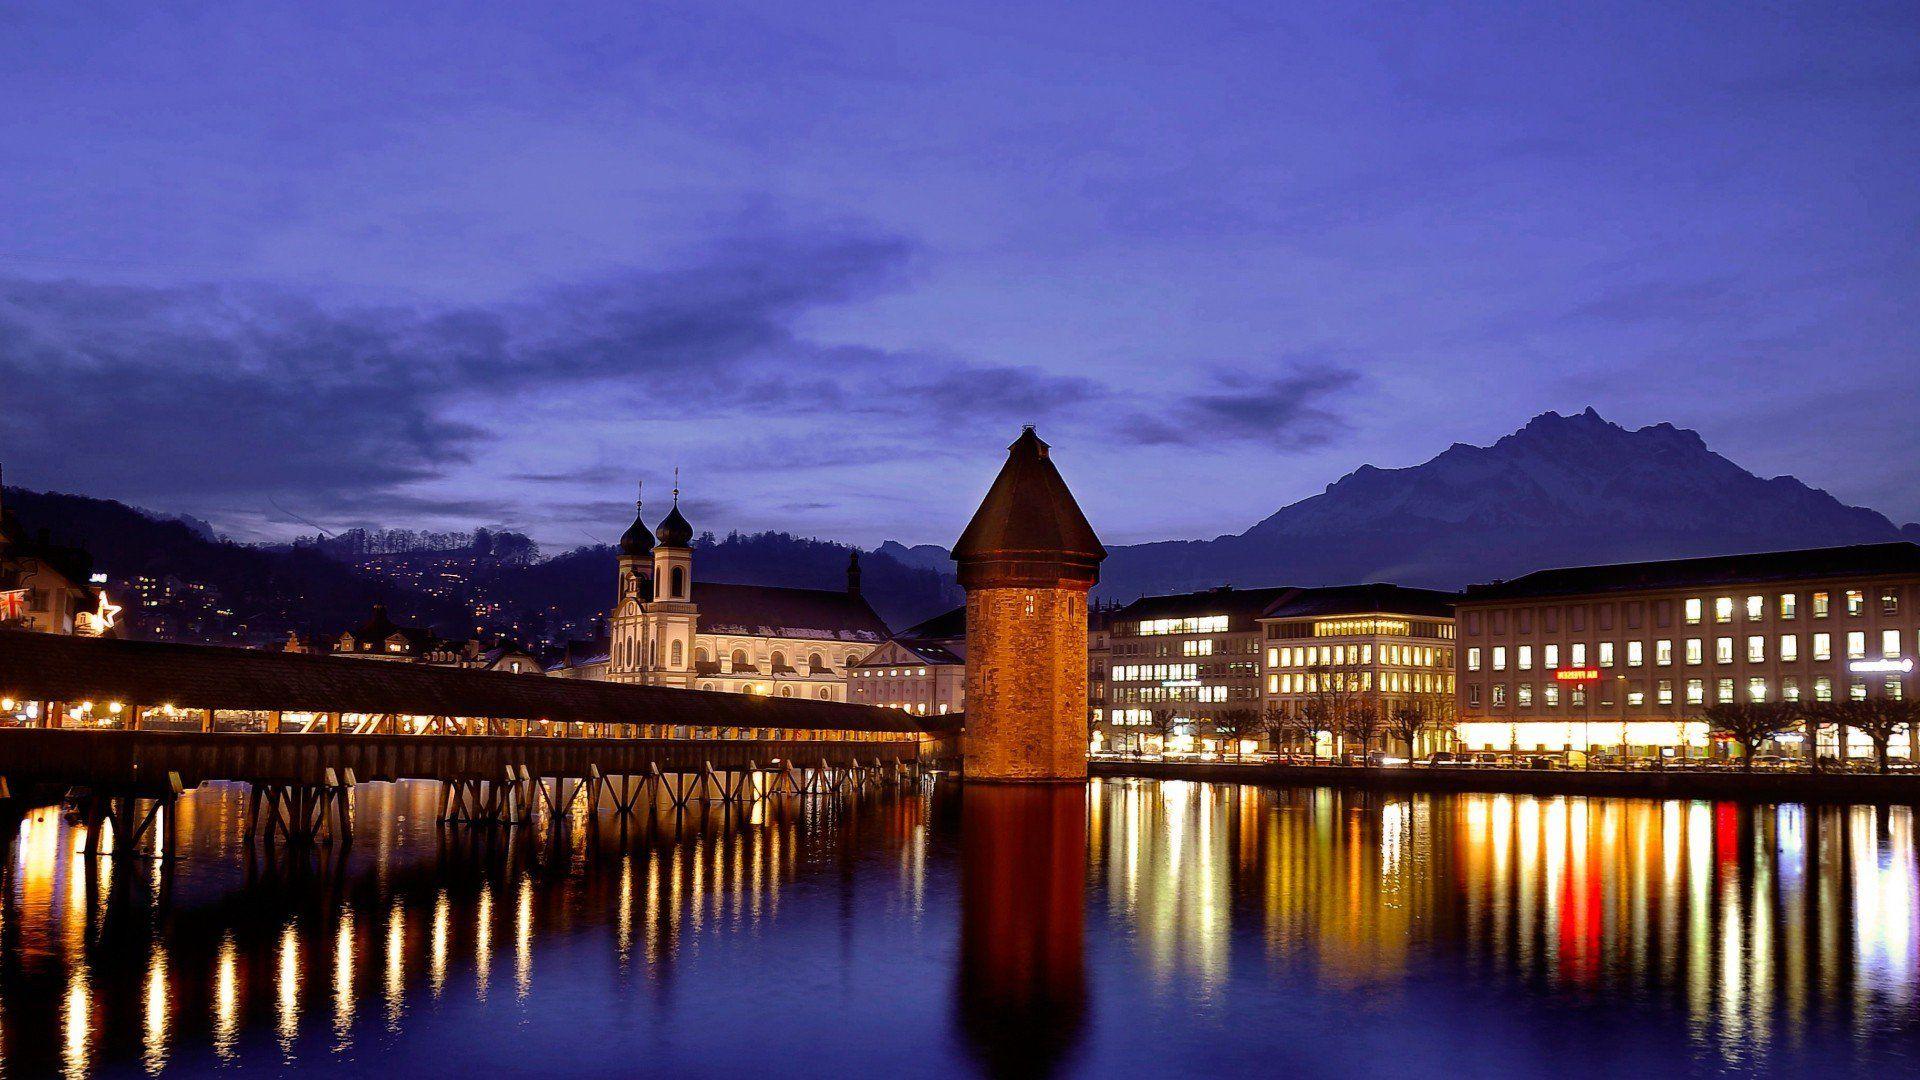 Switzerland Night, HD World, 4k Wallpaper, Image, Background